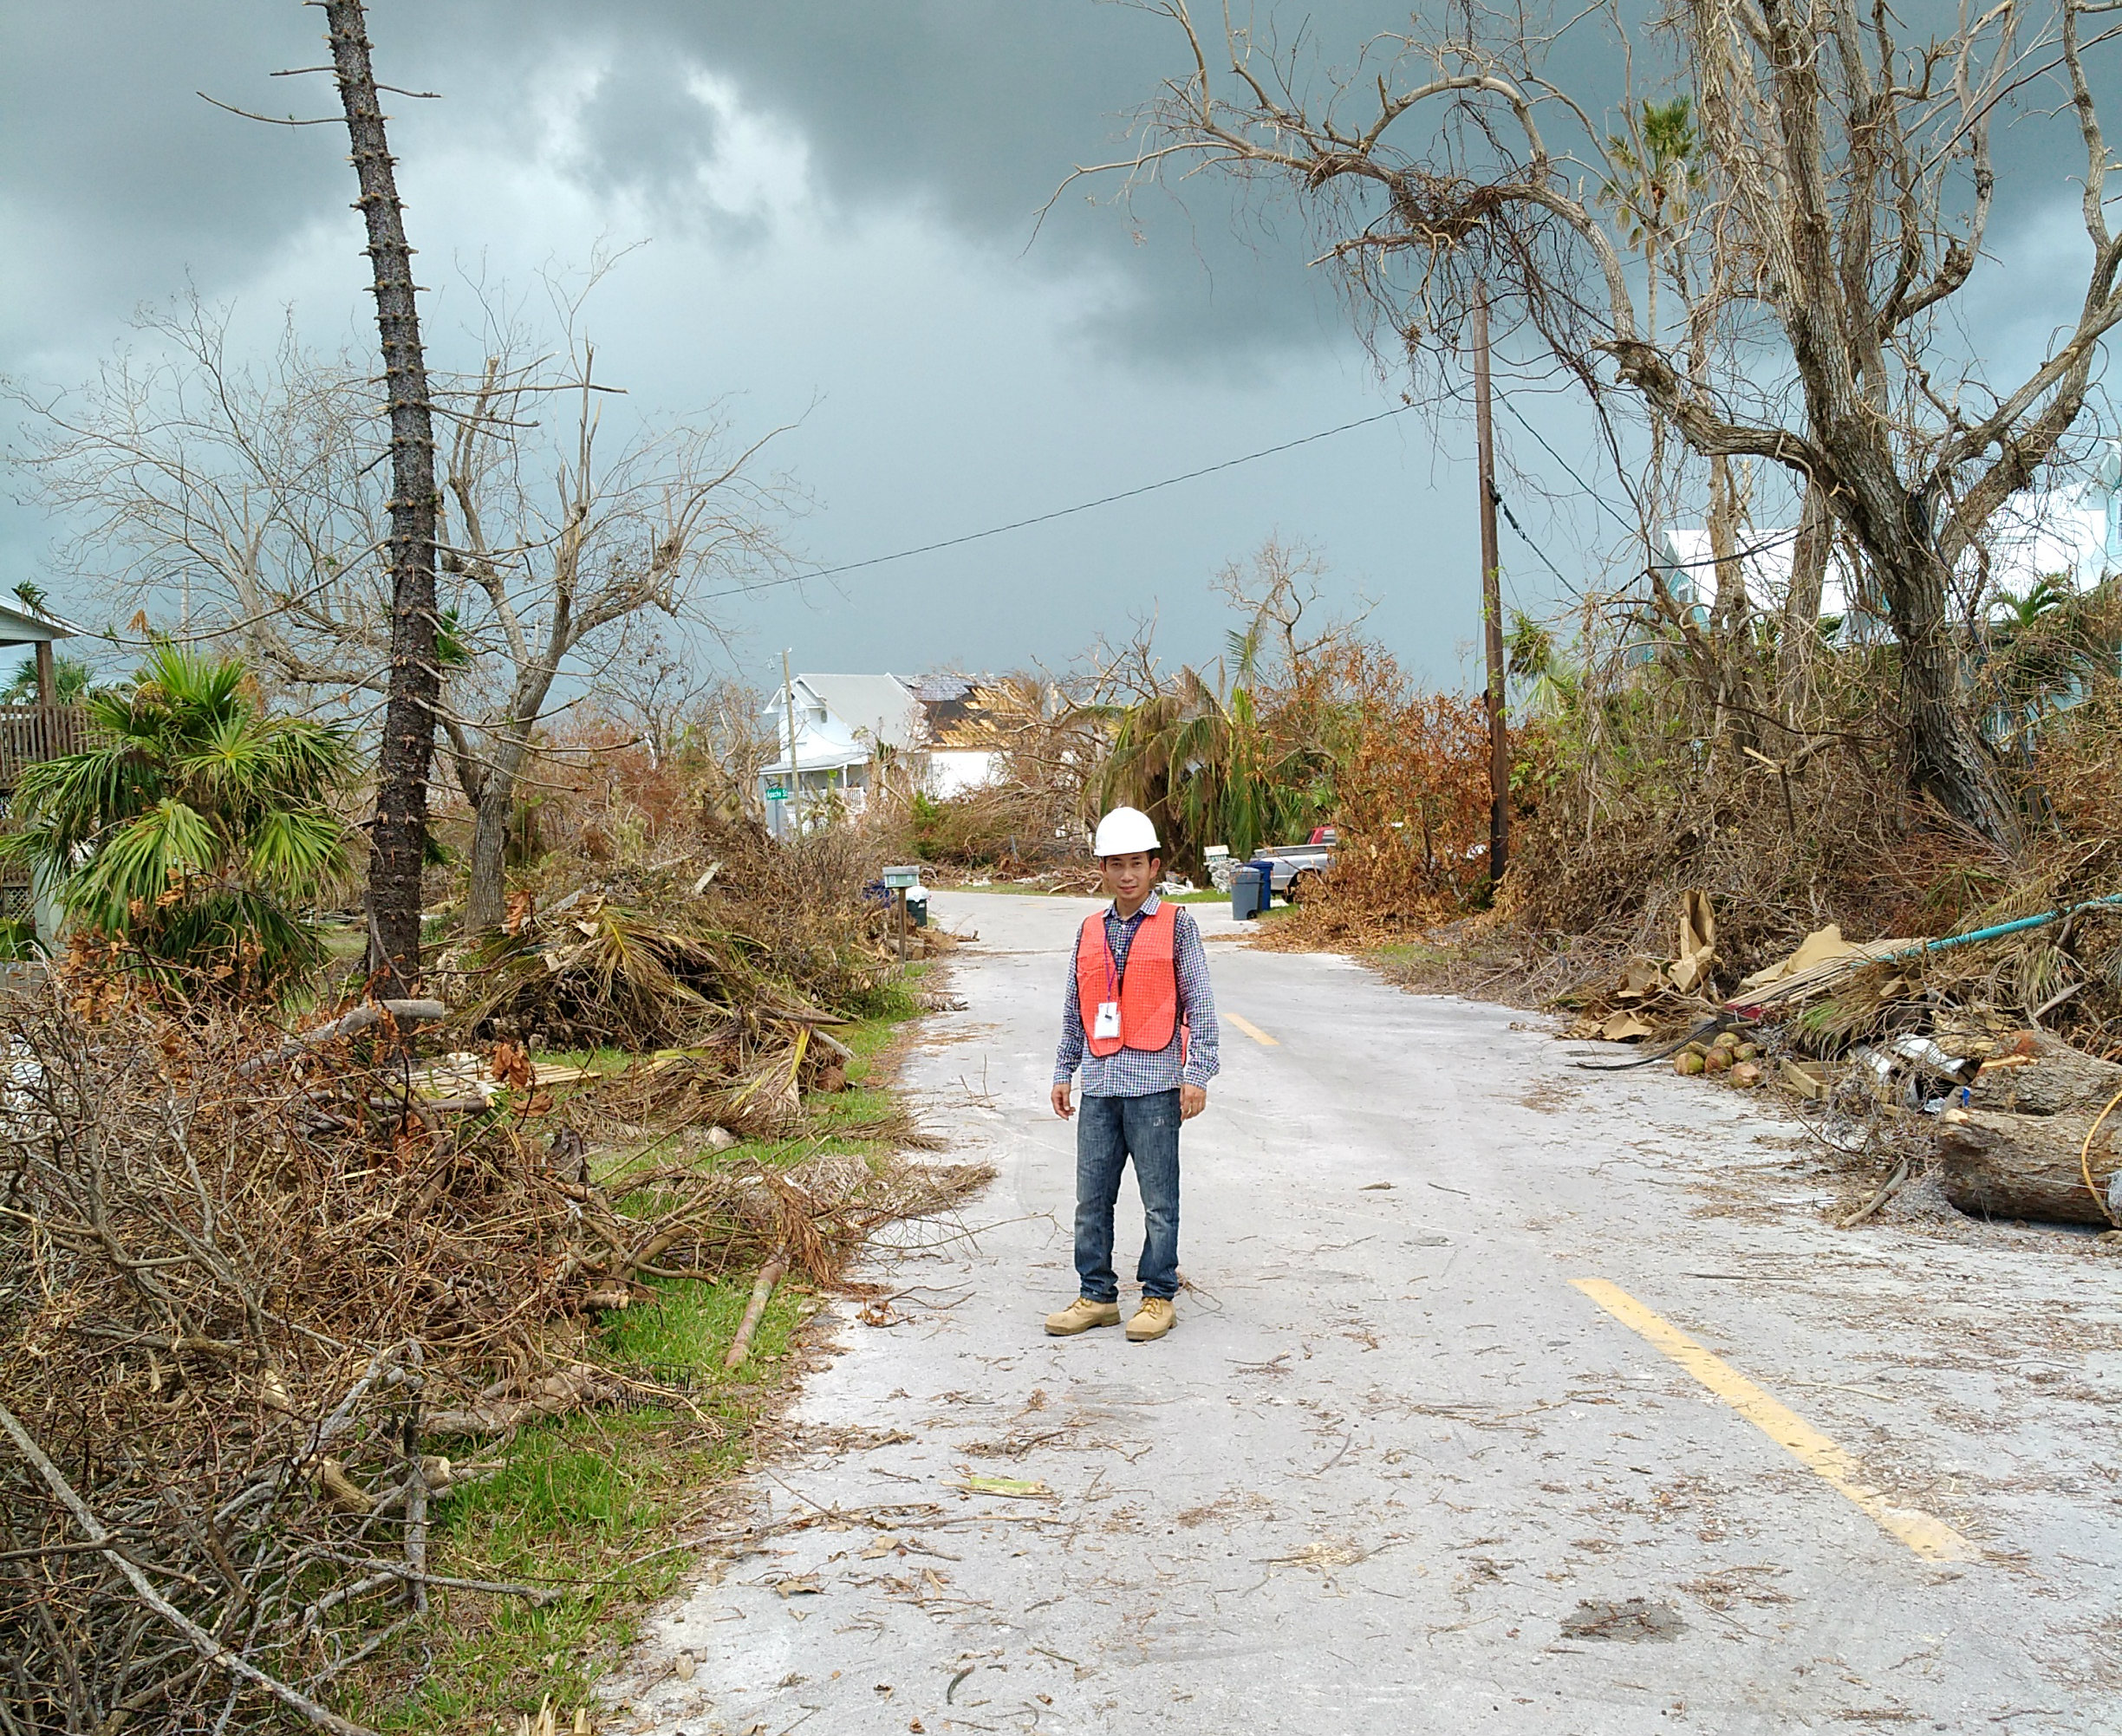 Colorado School of Mines professor Shiling Pei in the Florida Keys after Hurricane Irma